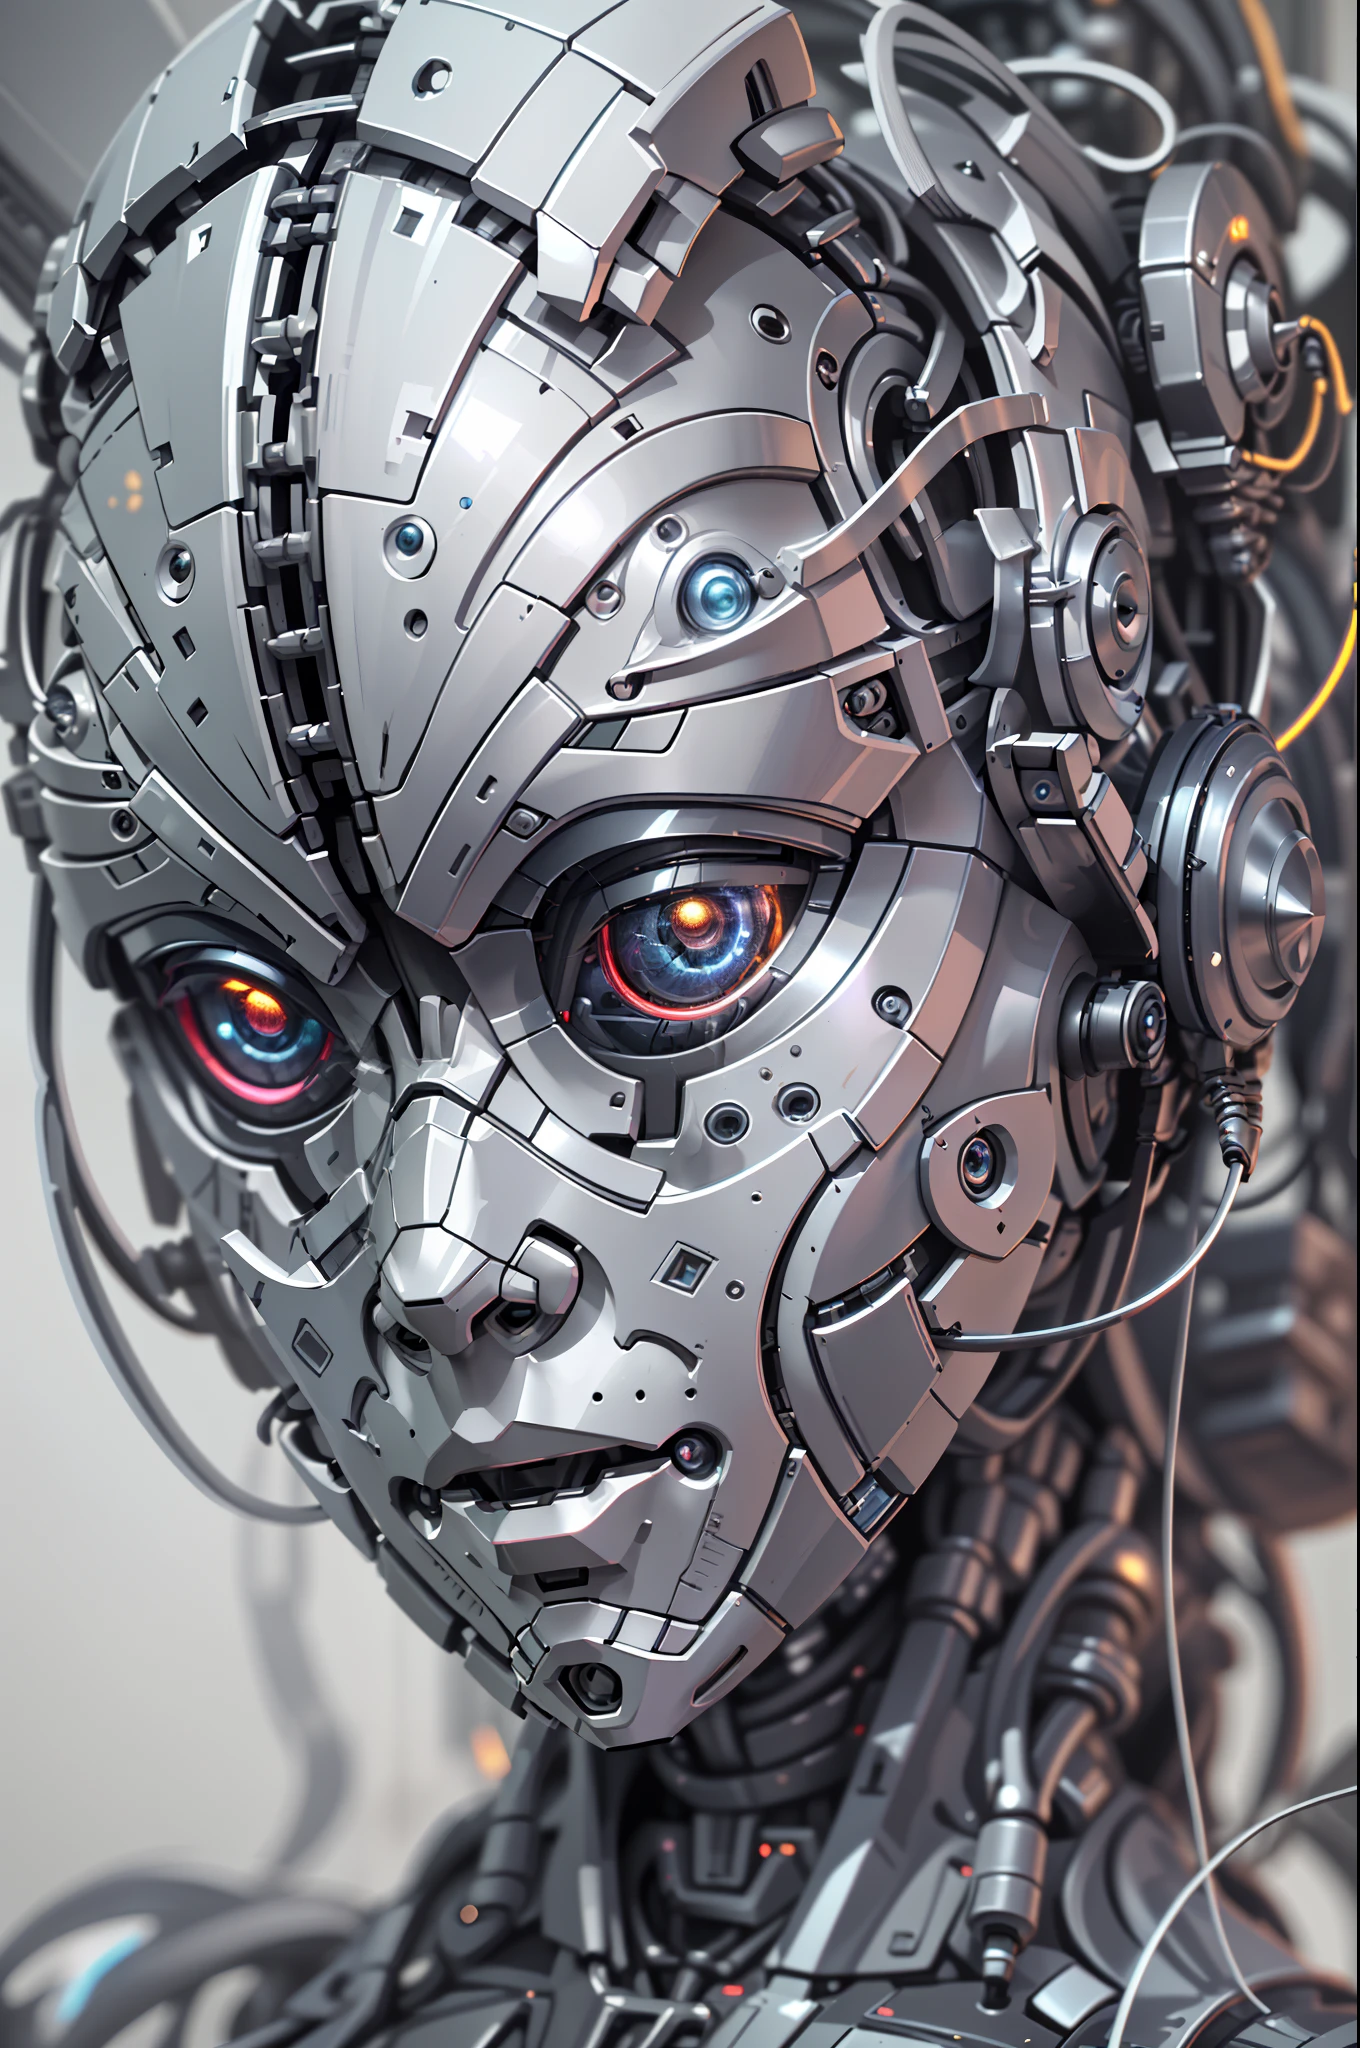 Intricate 3d rendering of highly detailed beautiful ceramic silhouette female 机器人 face, 机器人, 机器人 part, 150 毫米, 美丽的工作室柔和的灯光, 边缘光, 生动的细节, 奢华赛博朋克, 蕾丝, 超现实的, 解剖学, 面部肌肉, 电缆电线, 微芯片, 优雅的, 美丽的背景, 辛烷值渲染, HR 吉格尔风格, 8千, 最好的质量, 杰作, 插图, 非常精致, 非常详细, CG, 统一, 墙纸 , (保真度, 保真度: 1.37), 惊人的, 精致细节, 杰作, 最好的质量, 官方艺术, extremely detailed cg 统一 8千 墙纸, 荒诞, unbelievably 荒诞, 机器人, 银色头盔, 全身, 坐着写